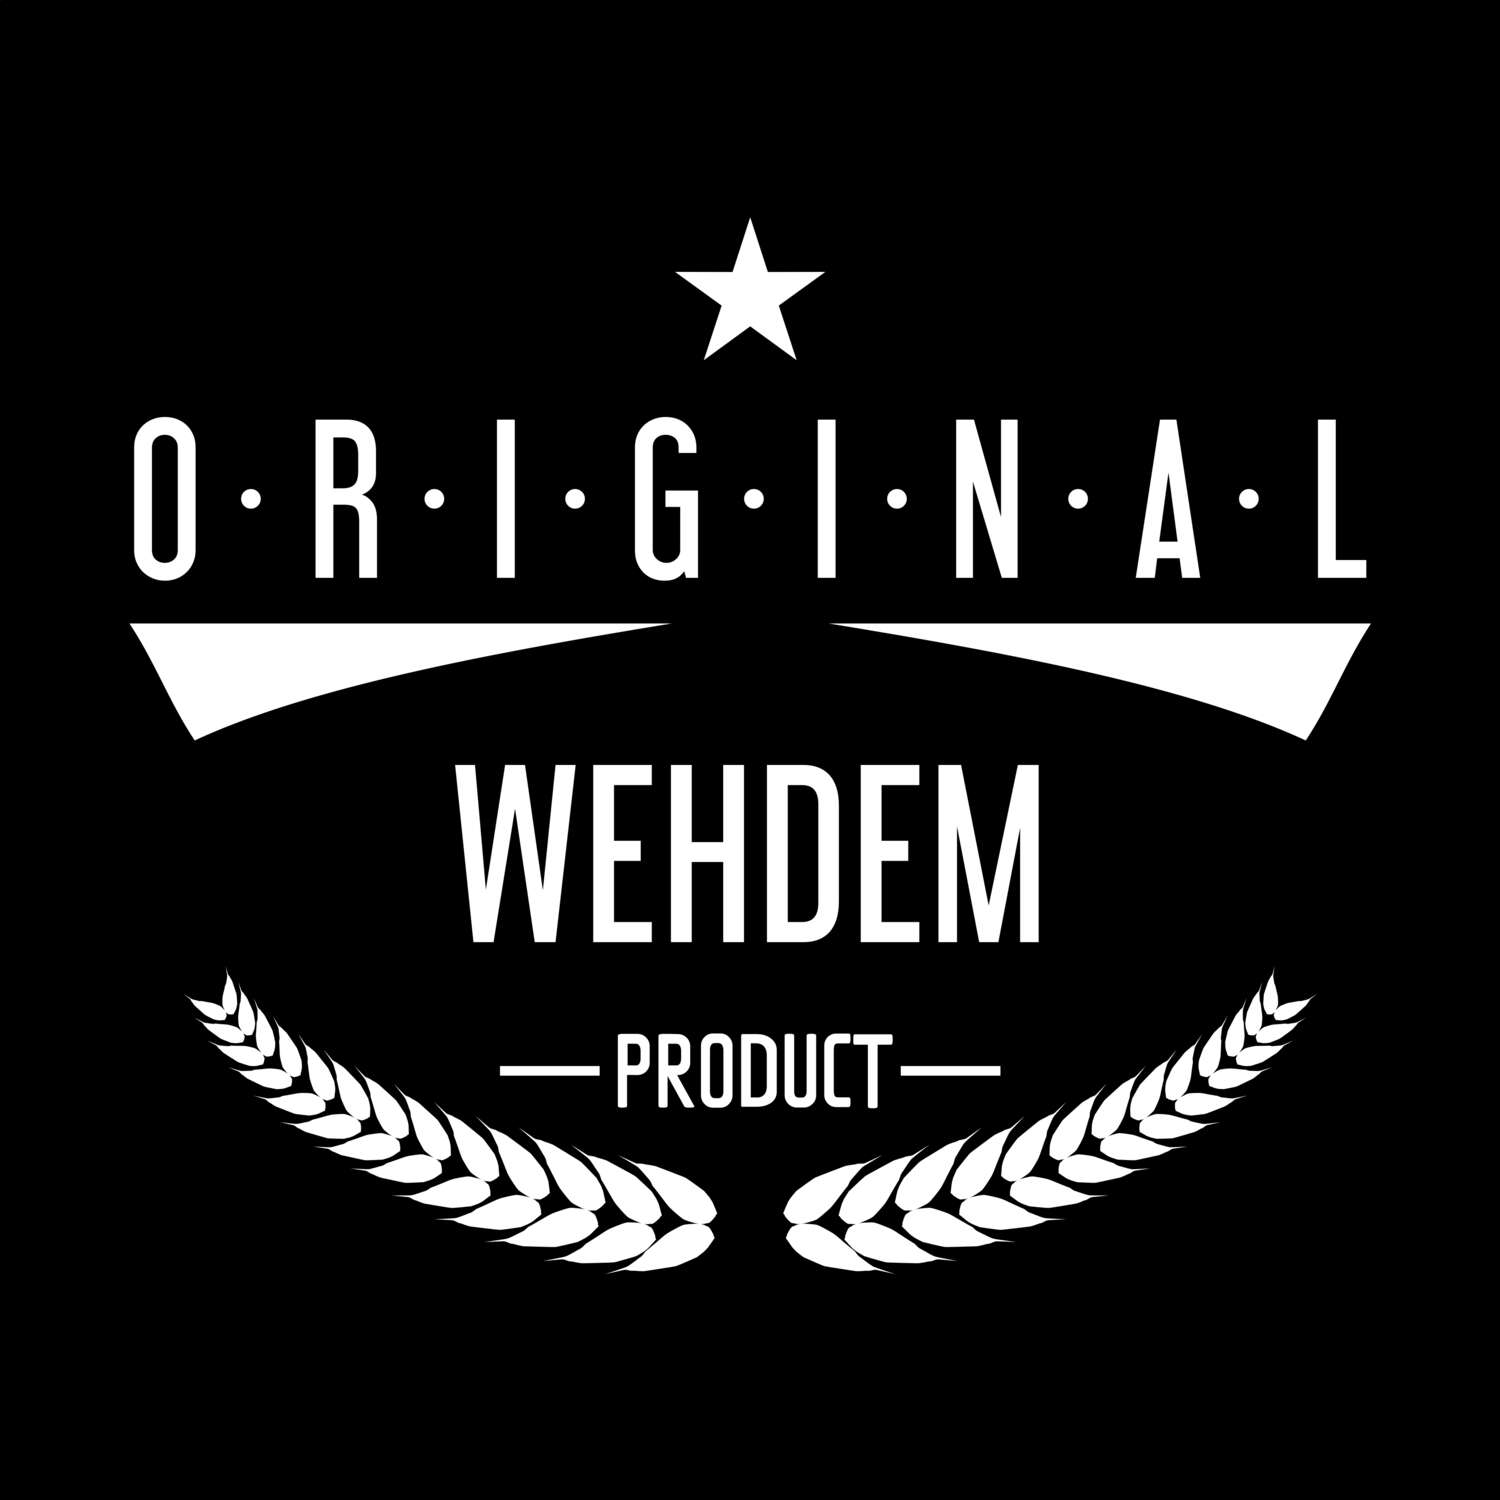 Wehdem T-Shirt »Original Product«